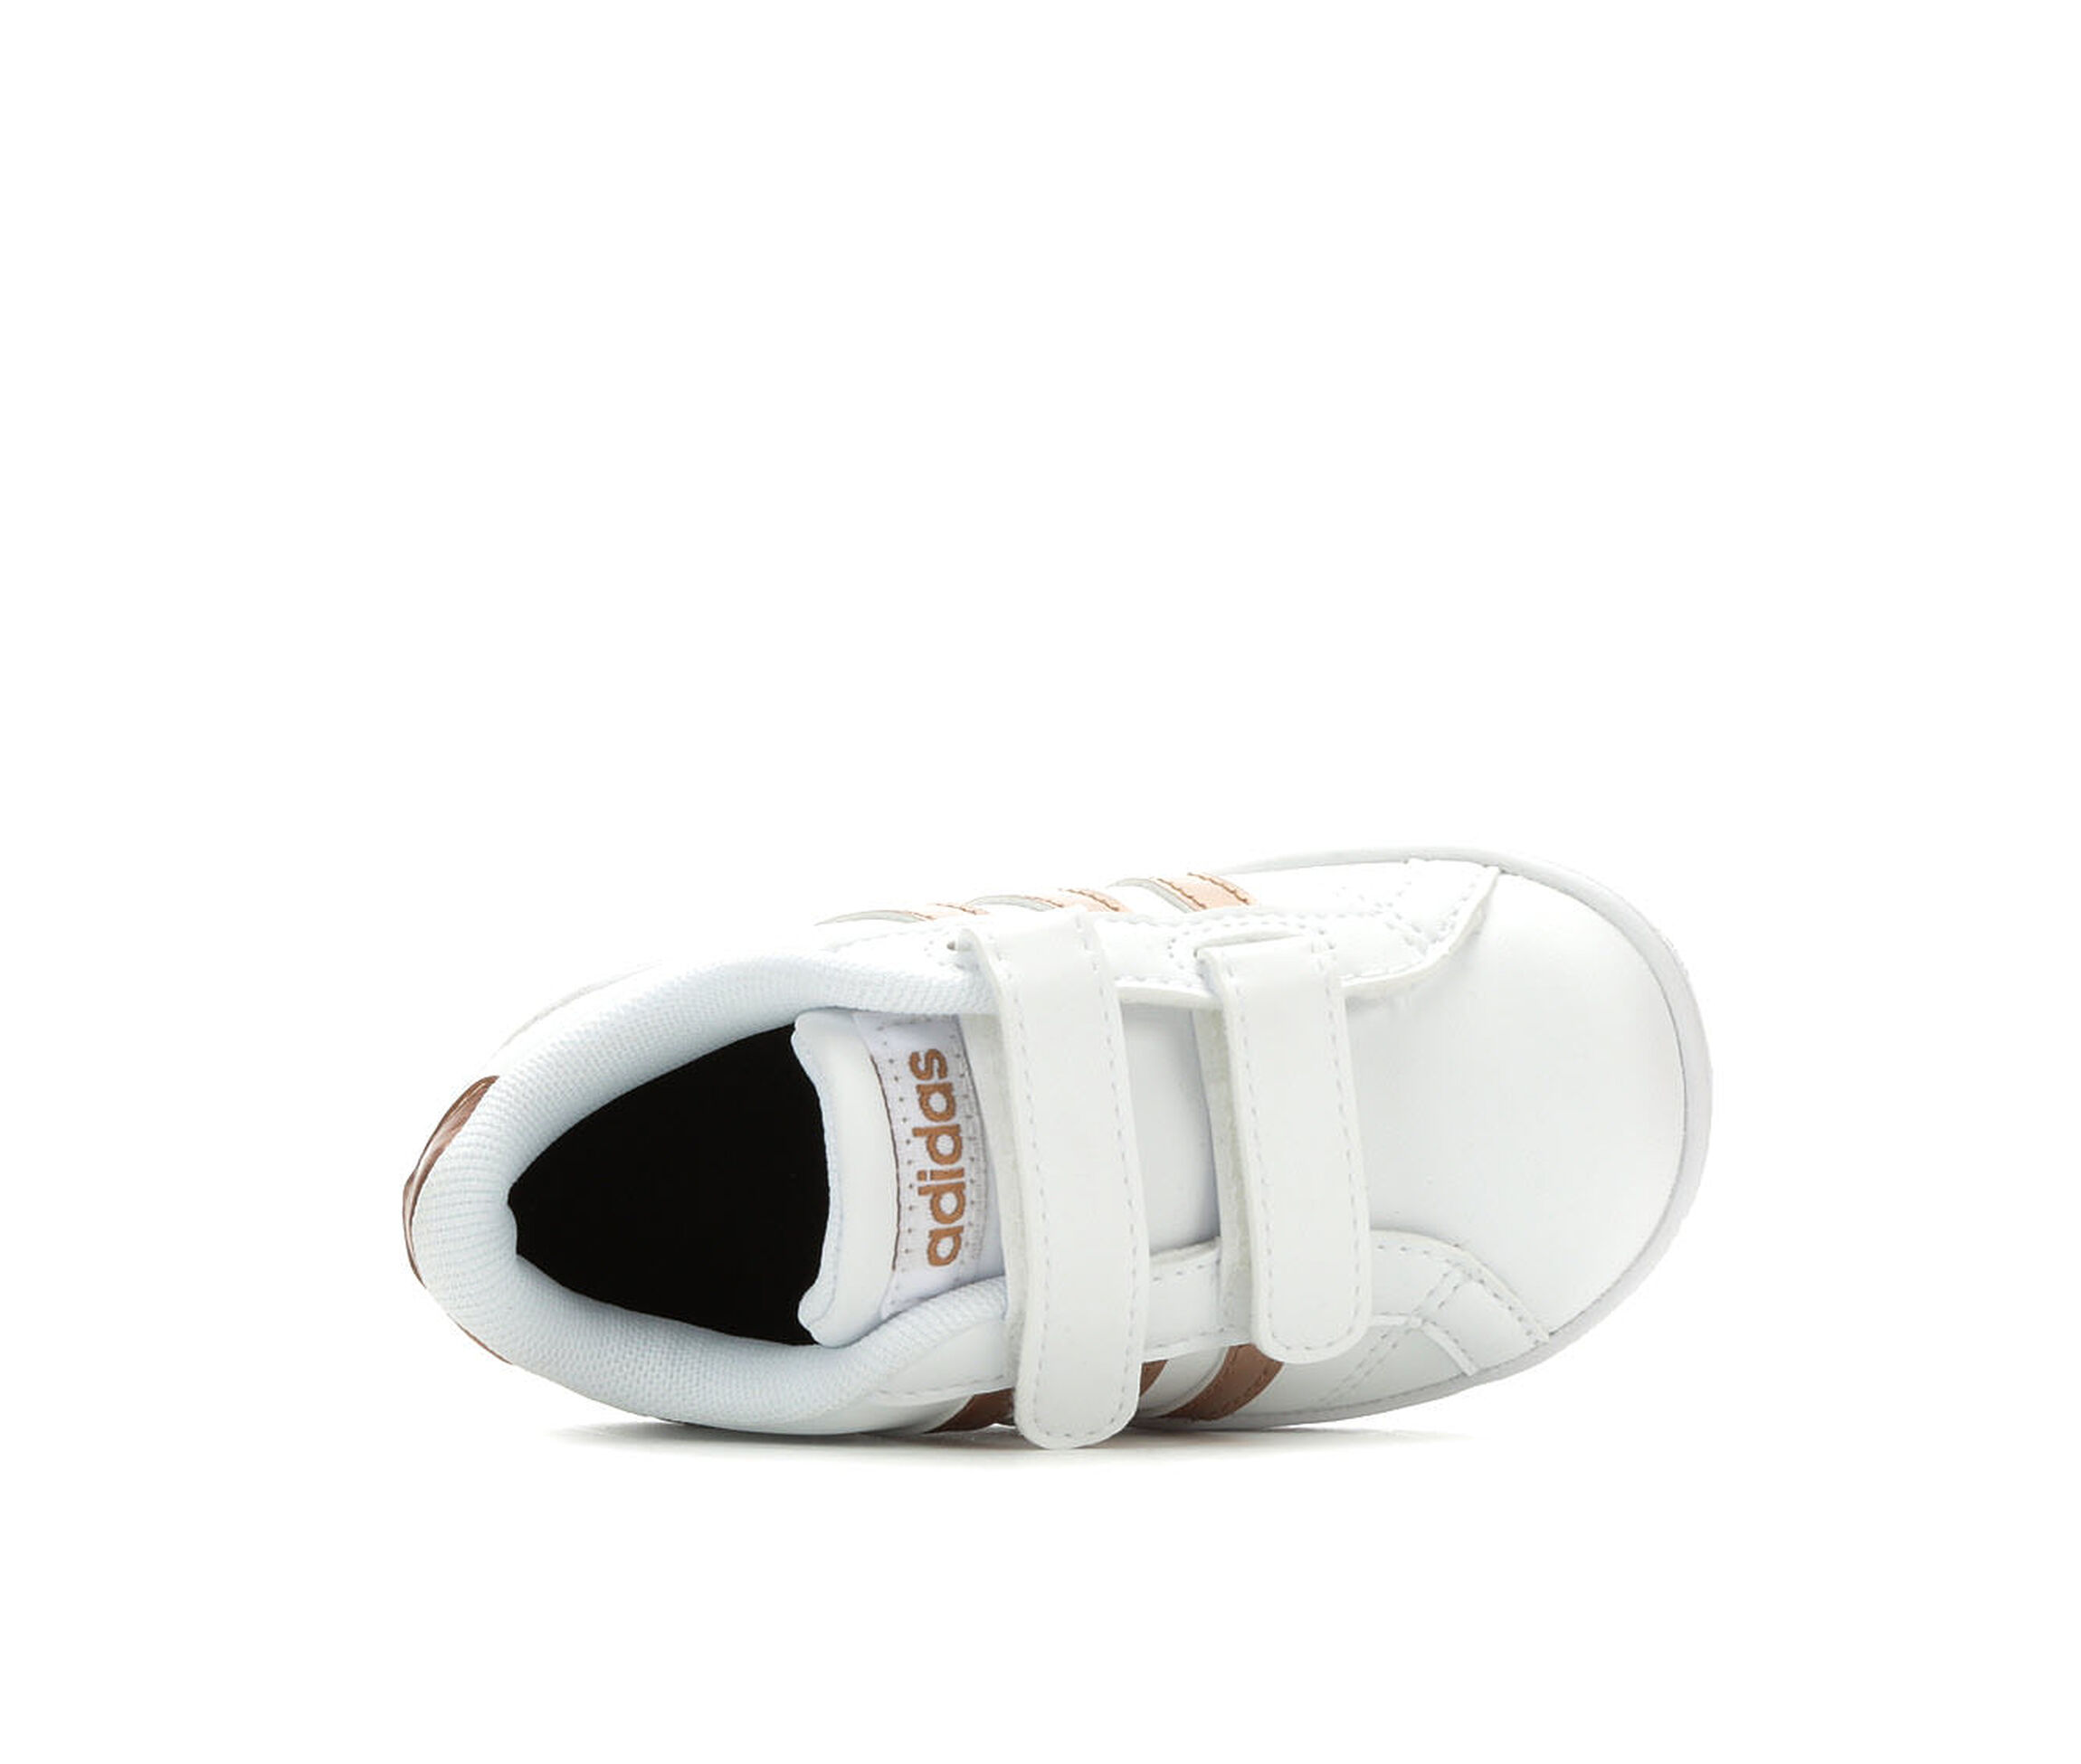 adidas baseline infant & toddler sneaker